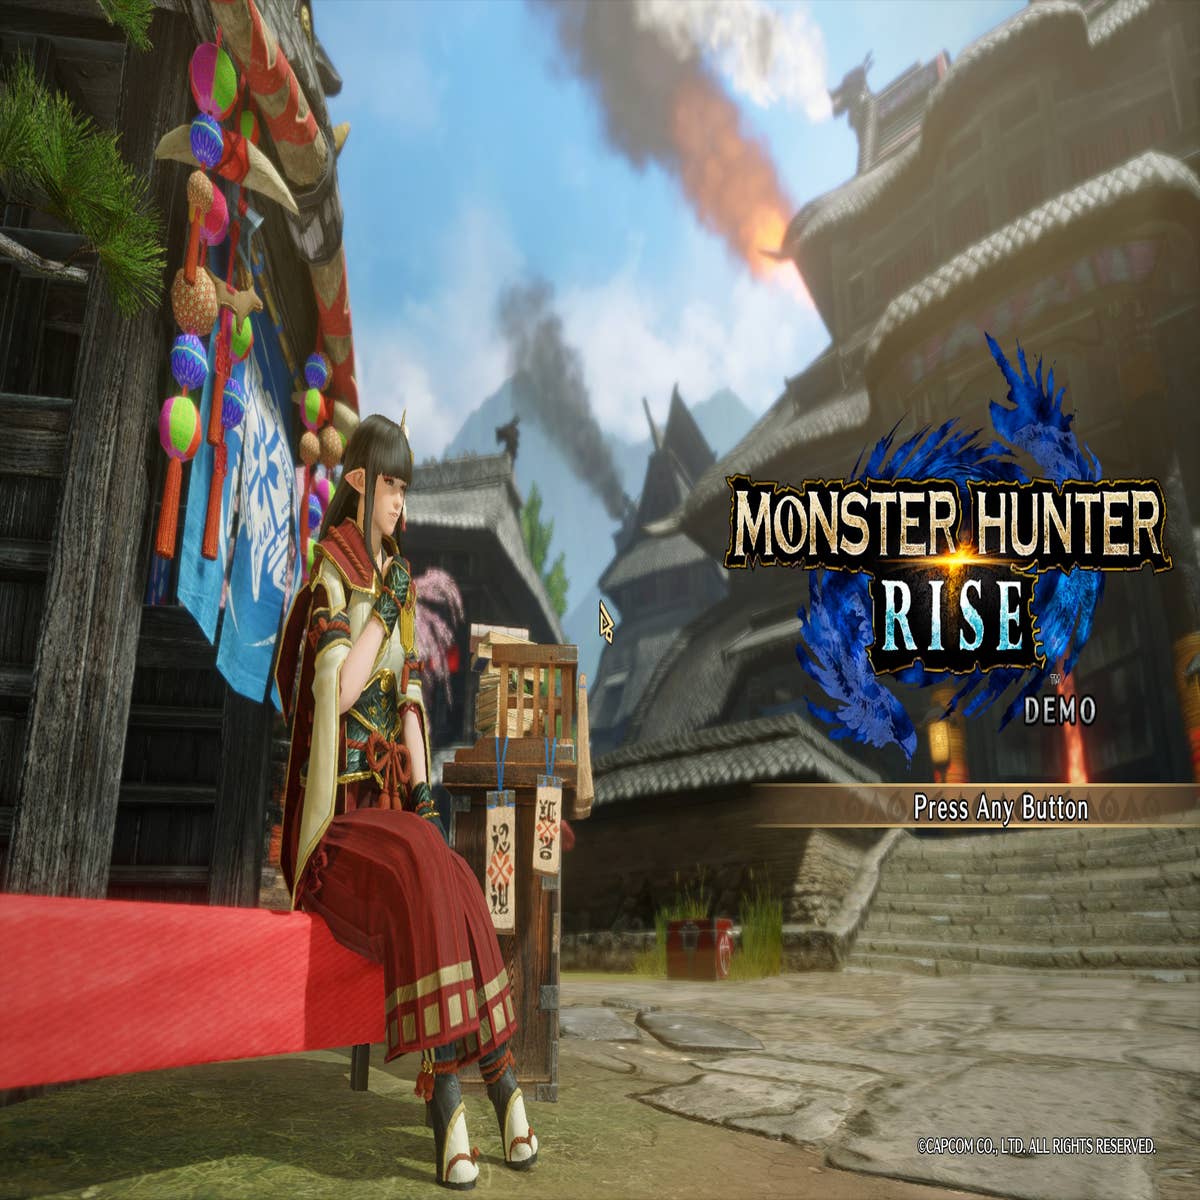 Monster Hunter Rise Vs World: Which Game Is Better?